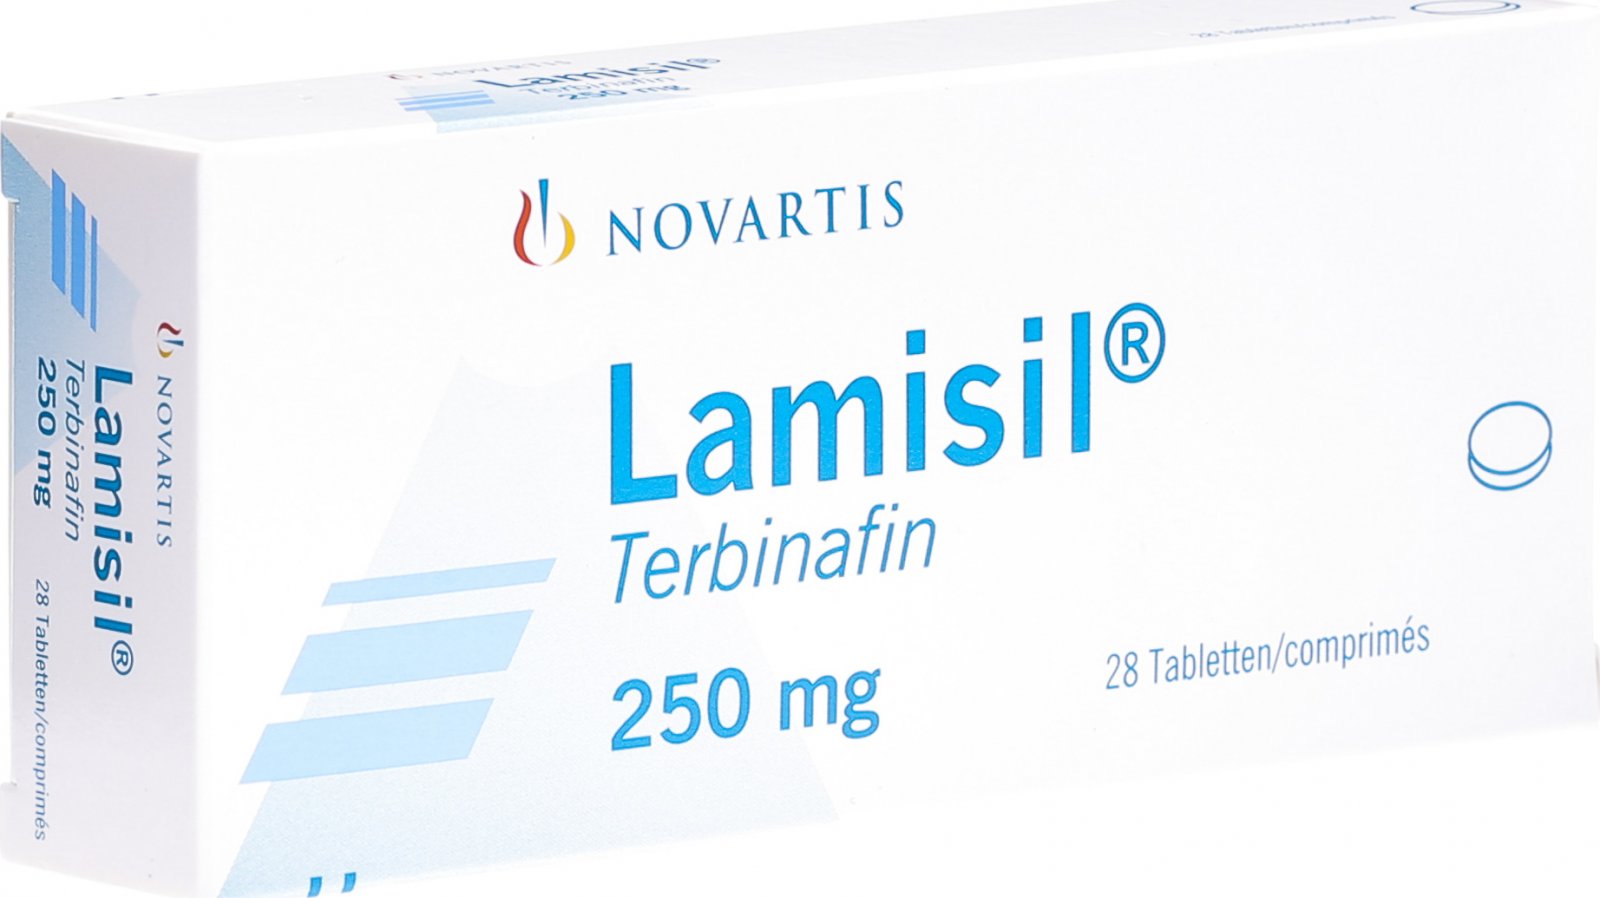 Lamisil Tabletten 250mg 28 Stuck In Der Adler Apotheke